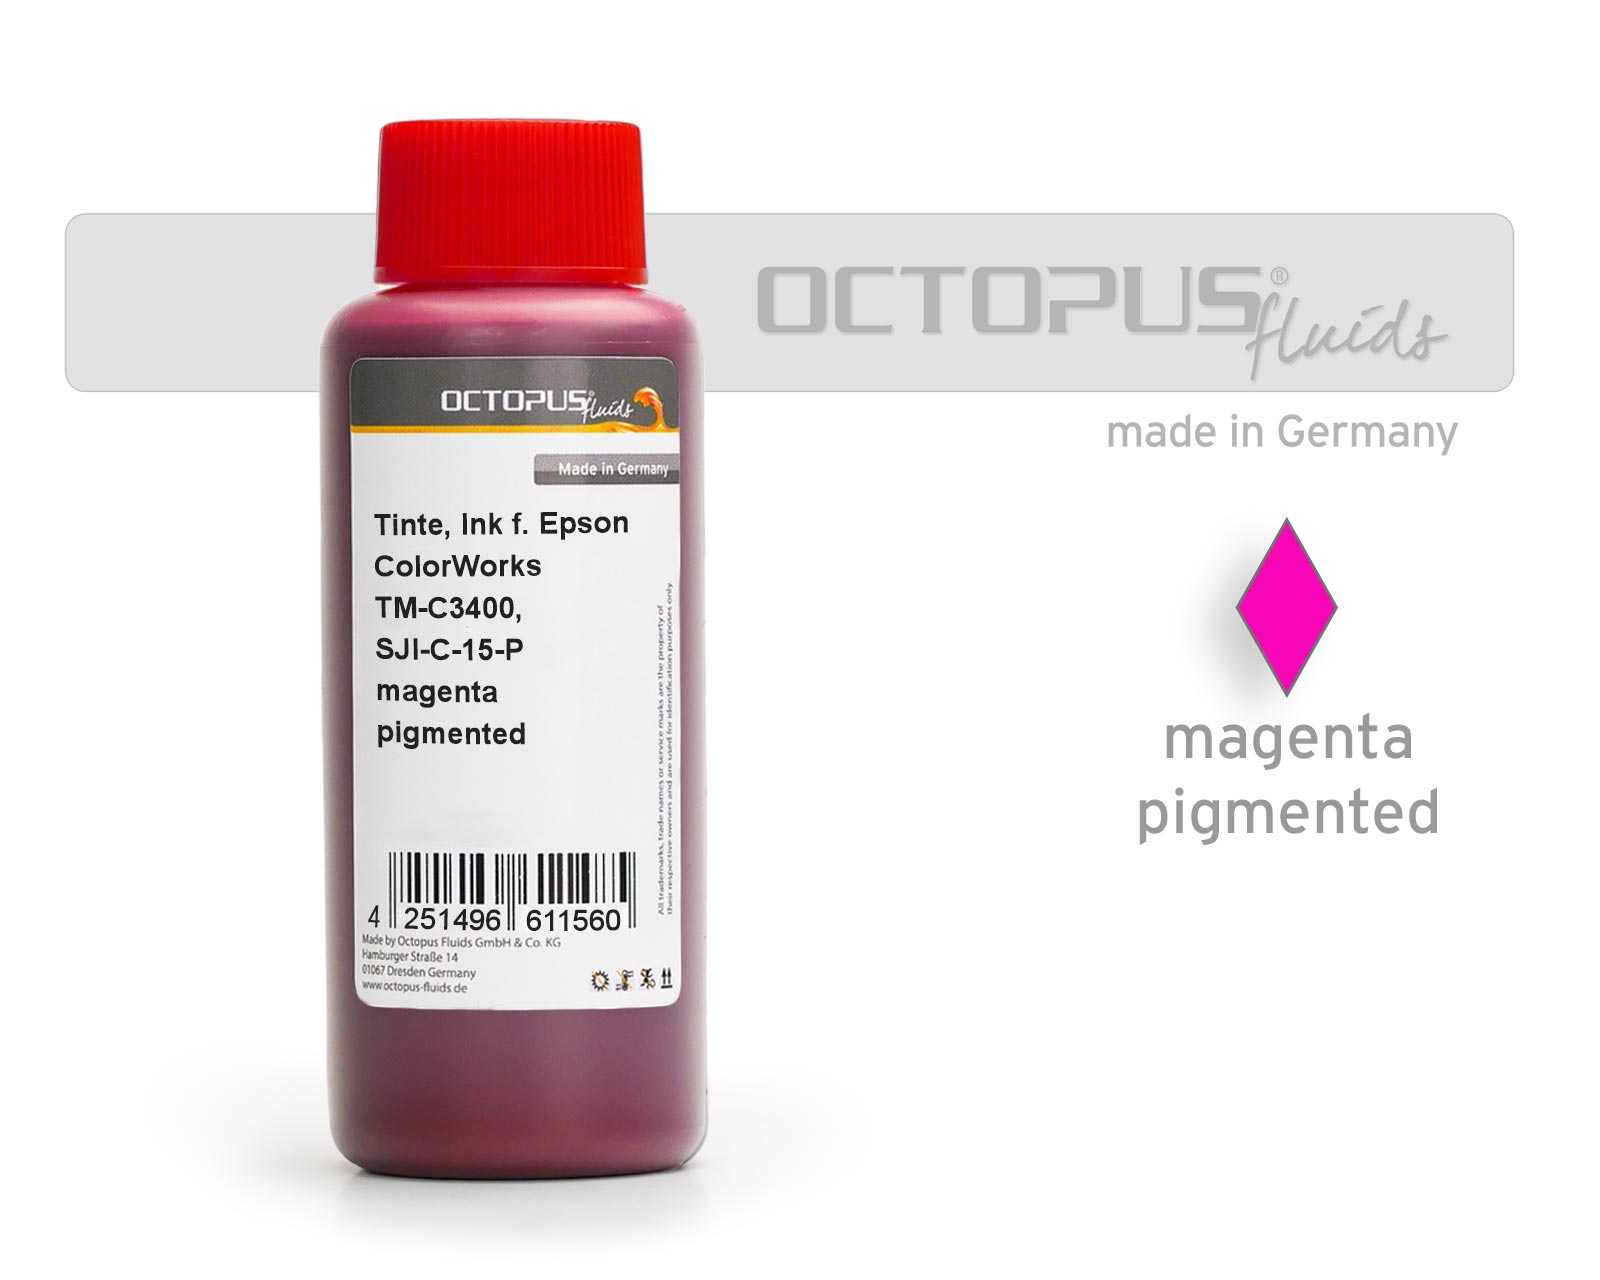 Refill ink for Epson ColorWorks TM-C3400, SJI-C-15-P magenta pigmented